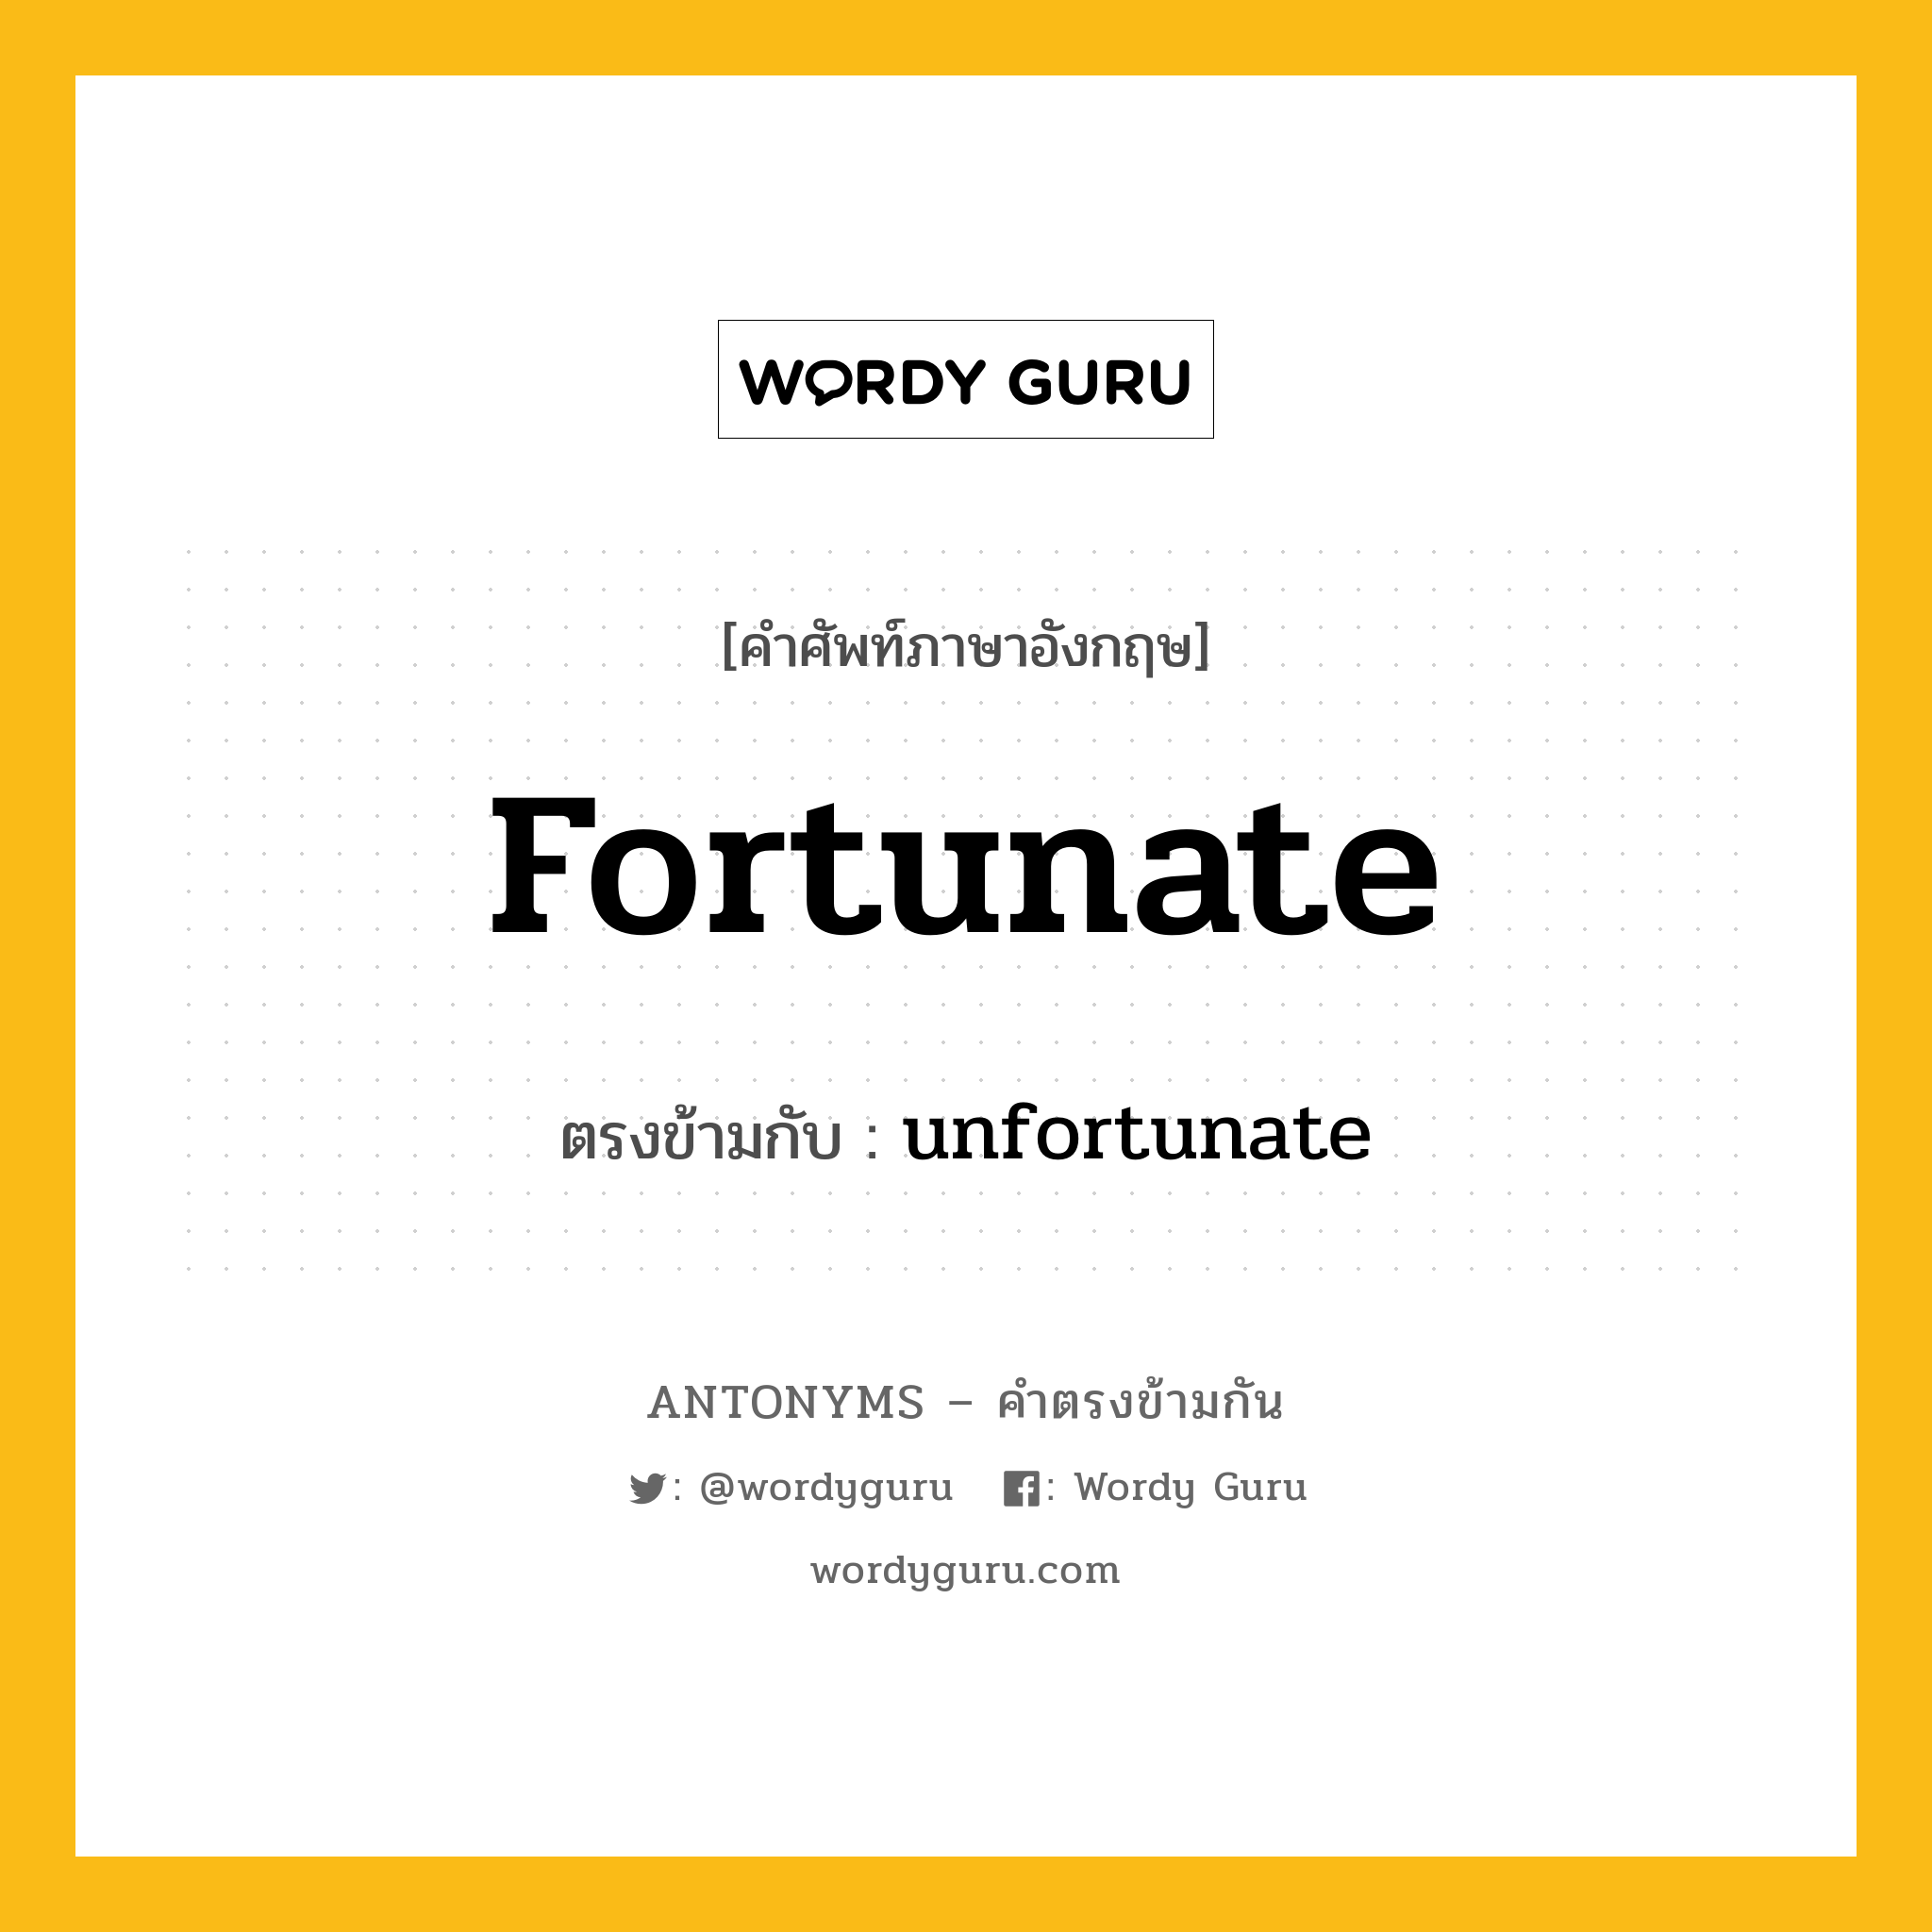 fortunate เป็นคำตรงข้ามกับคำไหนบ้าง?, คำศัพท์ภาษาอังกฤษ fortunate ตรงข้ามกับ unfortunate หมวด unfortunate